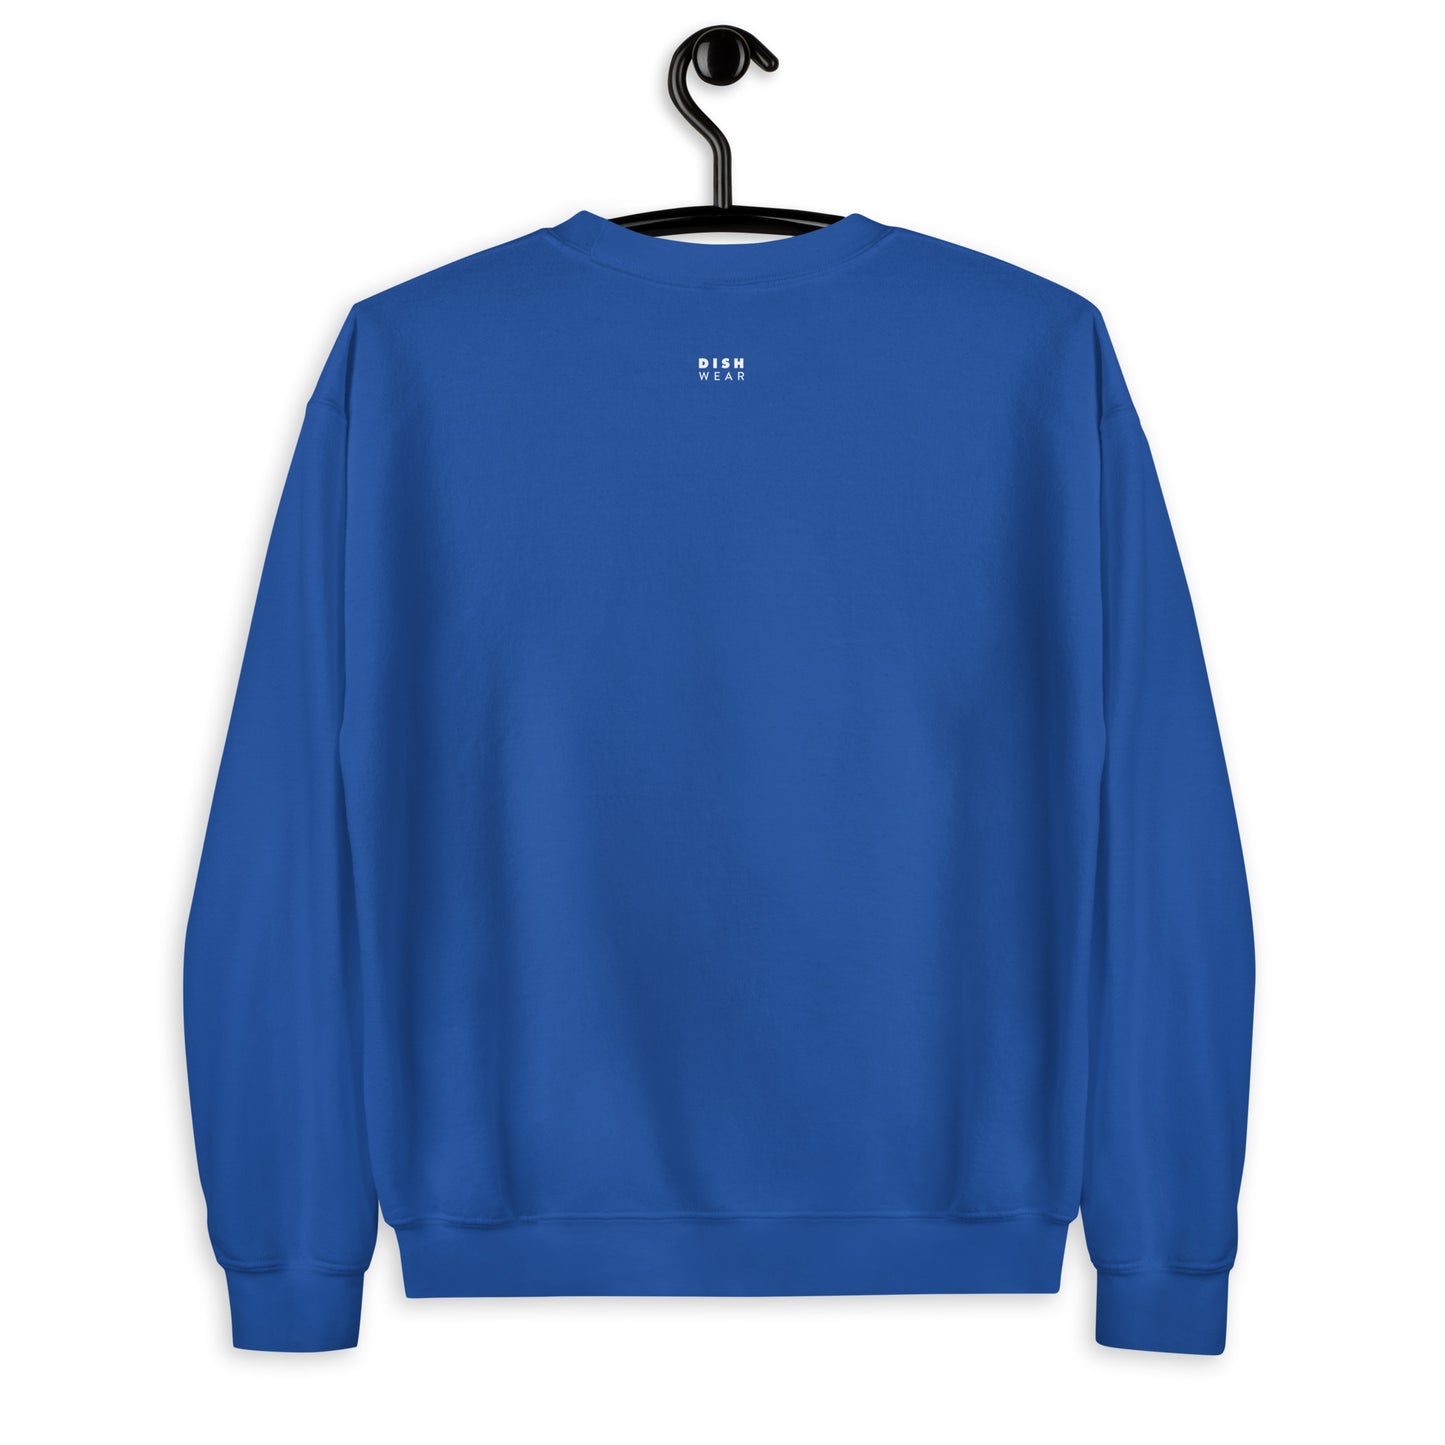 Cheese Sweatshirt - Straight Font